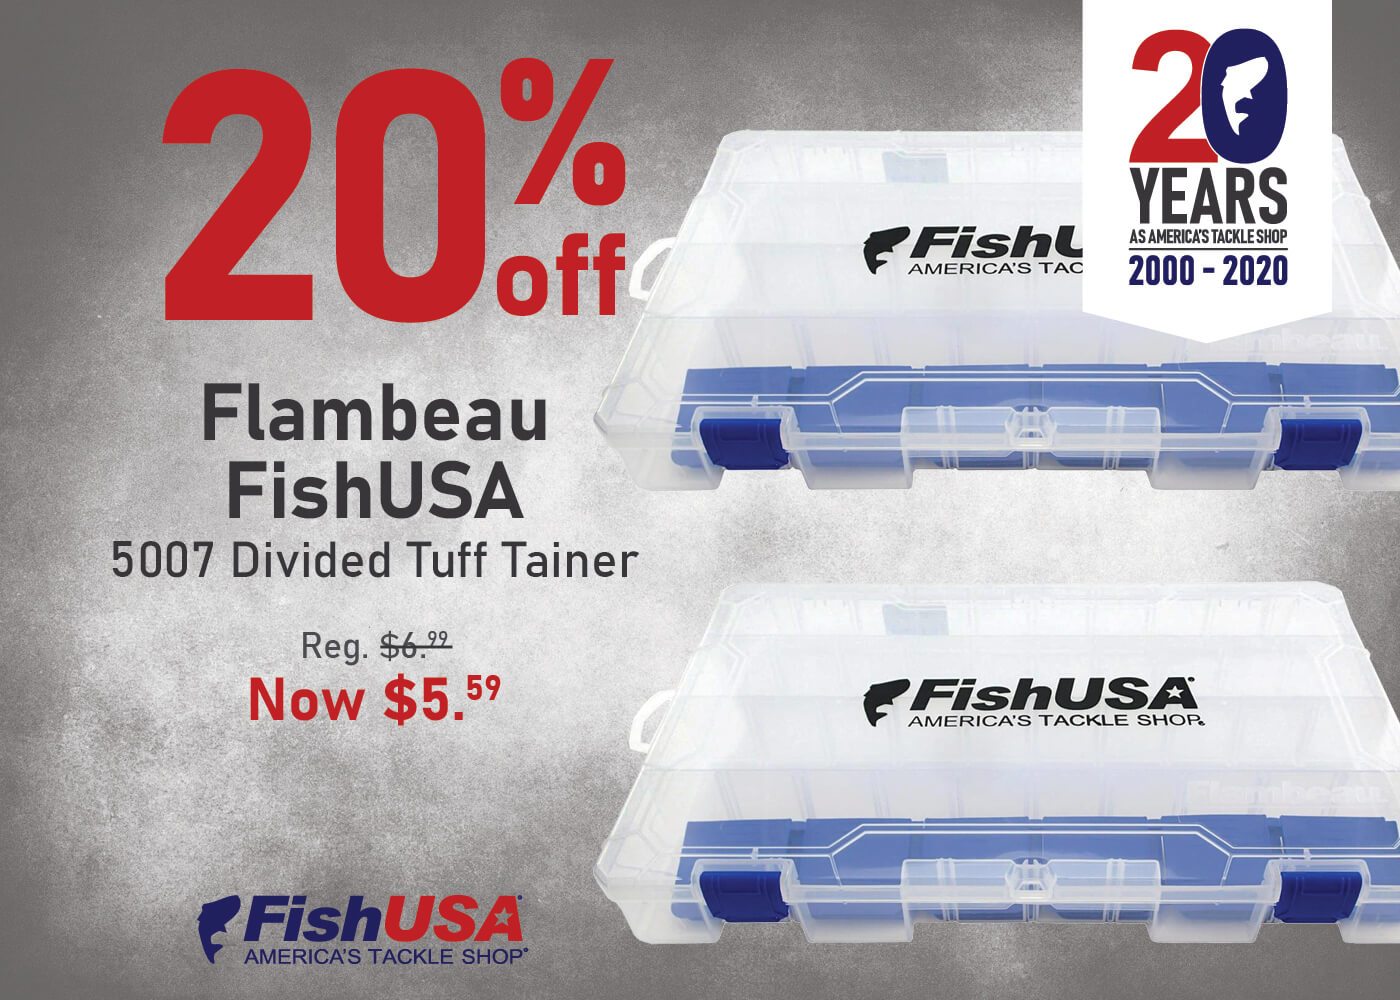 Take 20% off the Flambeau FishUSA 5007 Divided Tuff Tainer